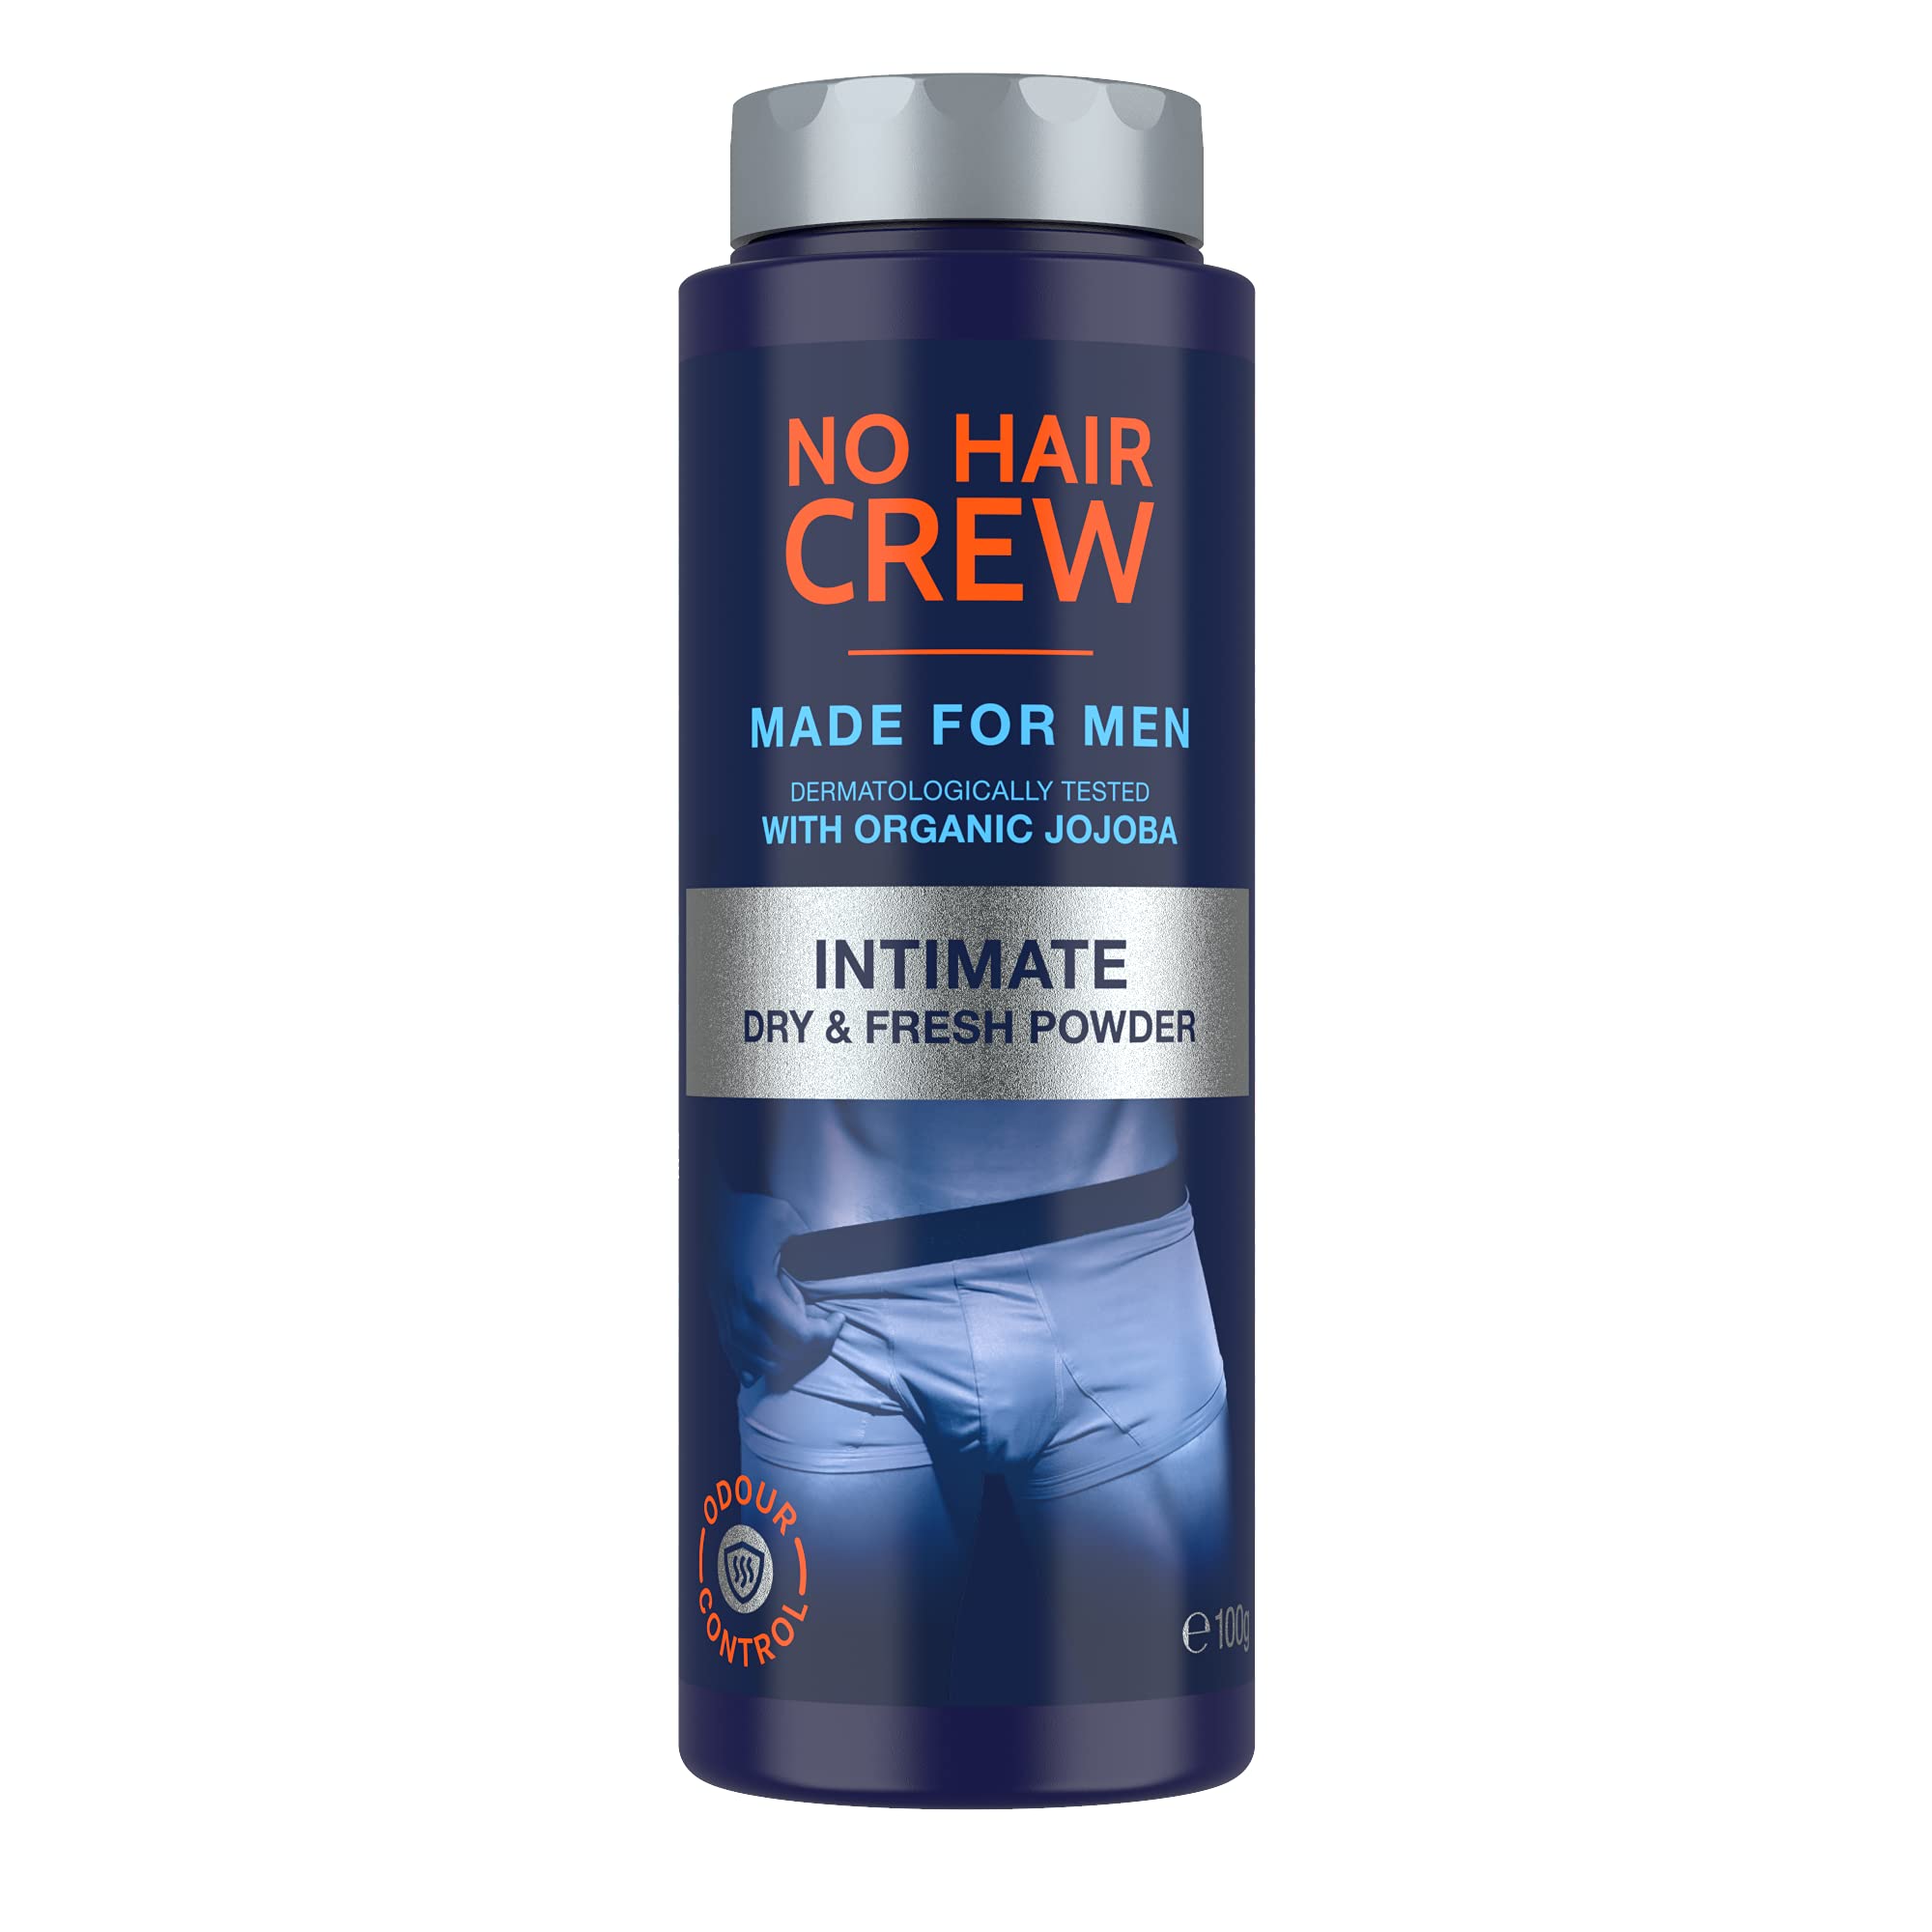 NO Hair Crew Intimate Dry & Fresh Powder. Premium talcum Free Body Powder for Sensitive Areas. Made for Men. 100 g.